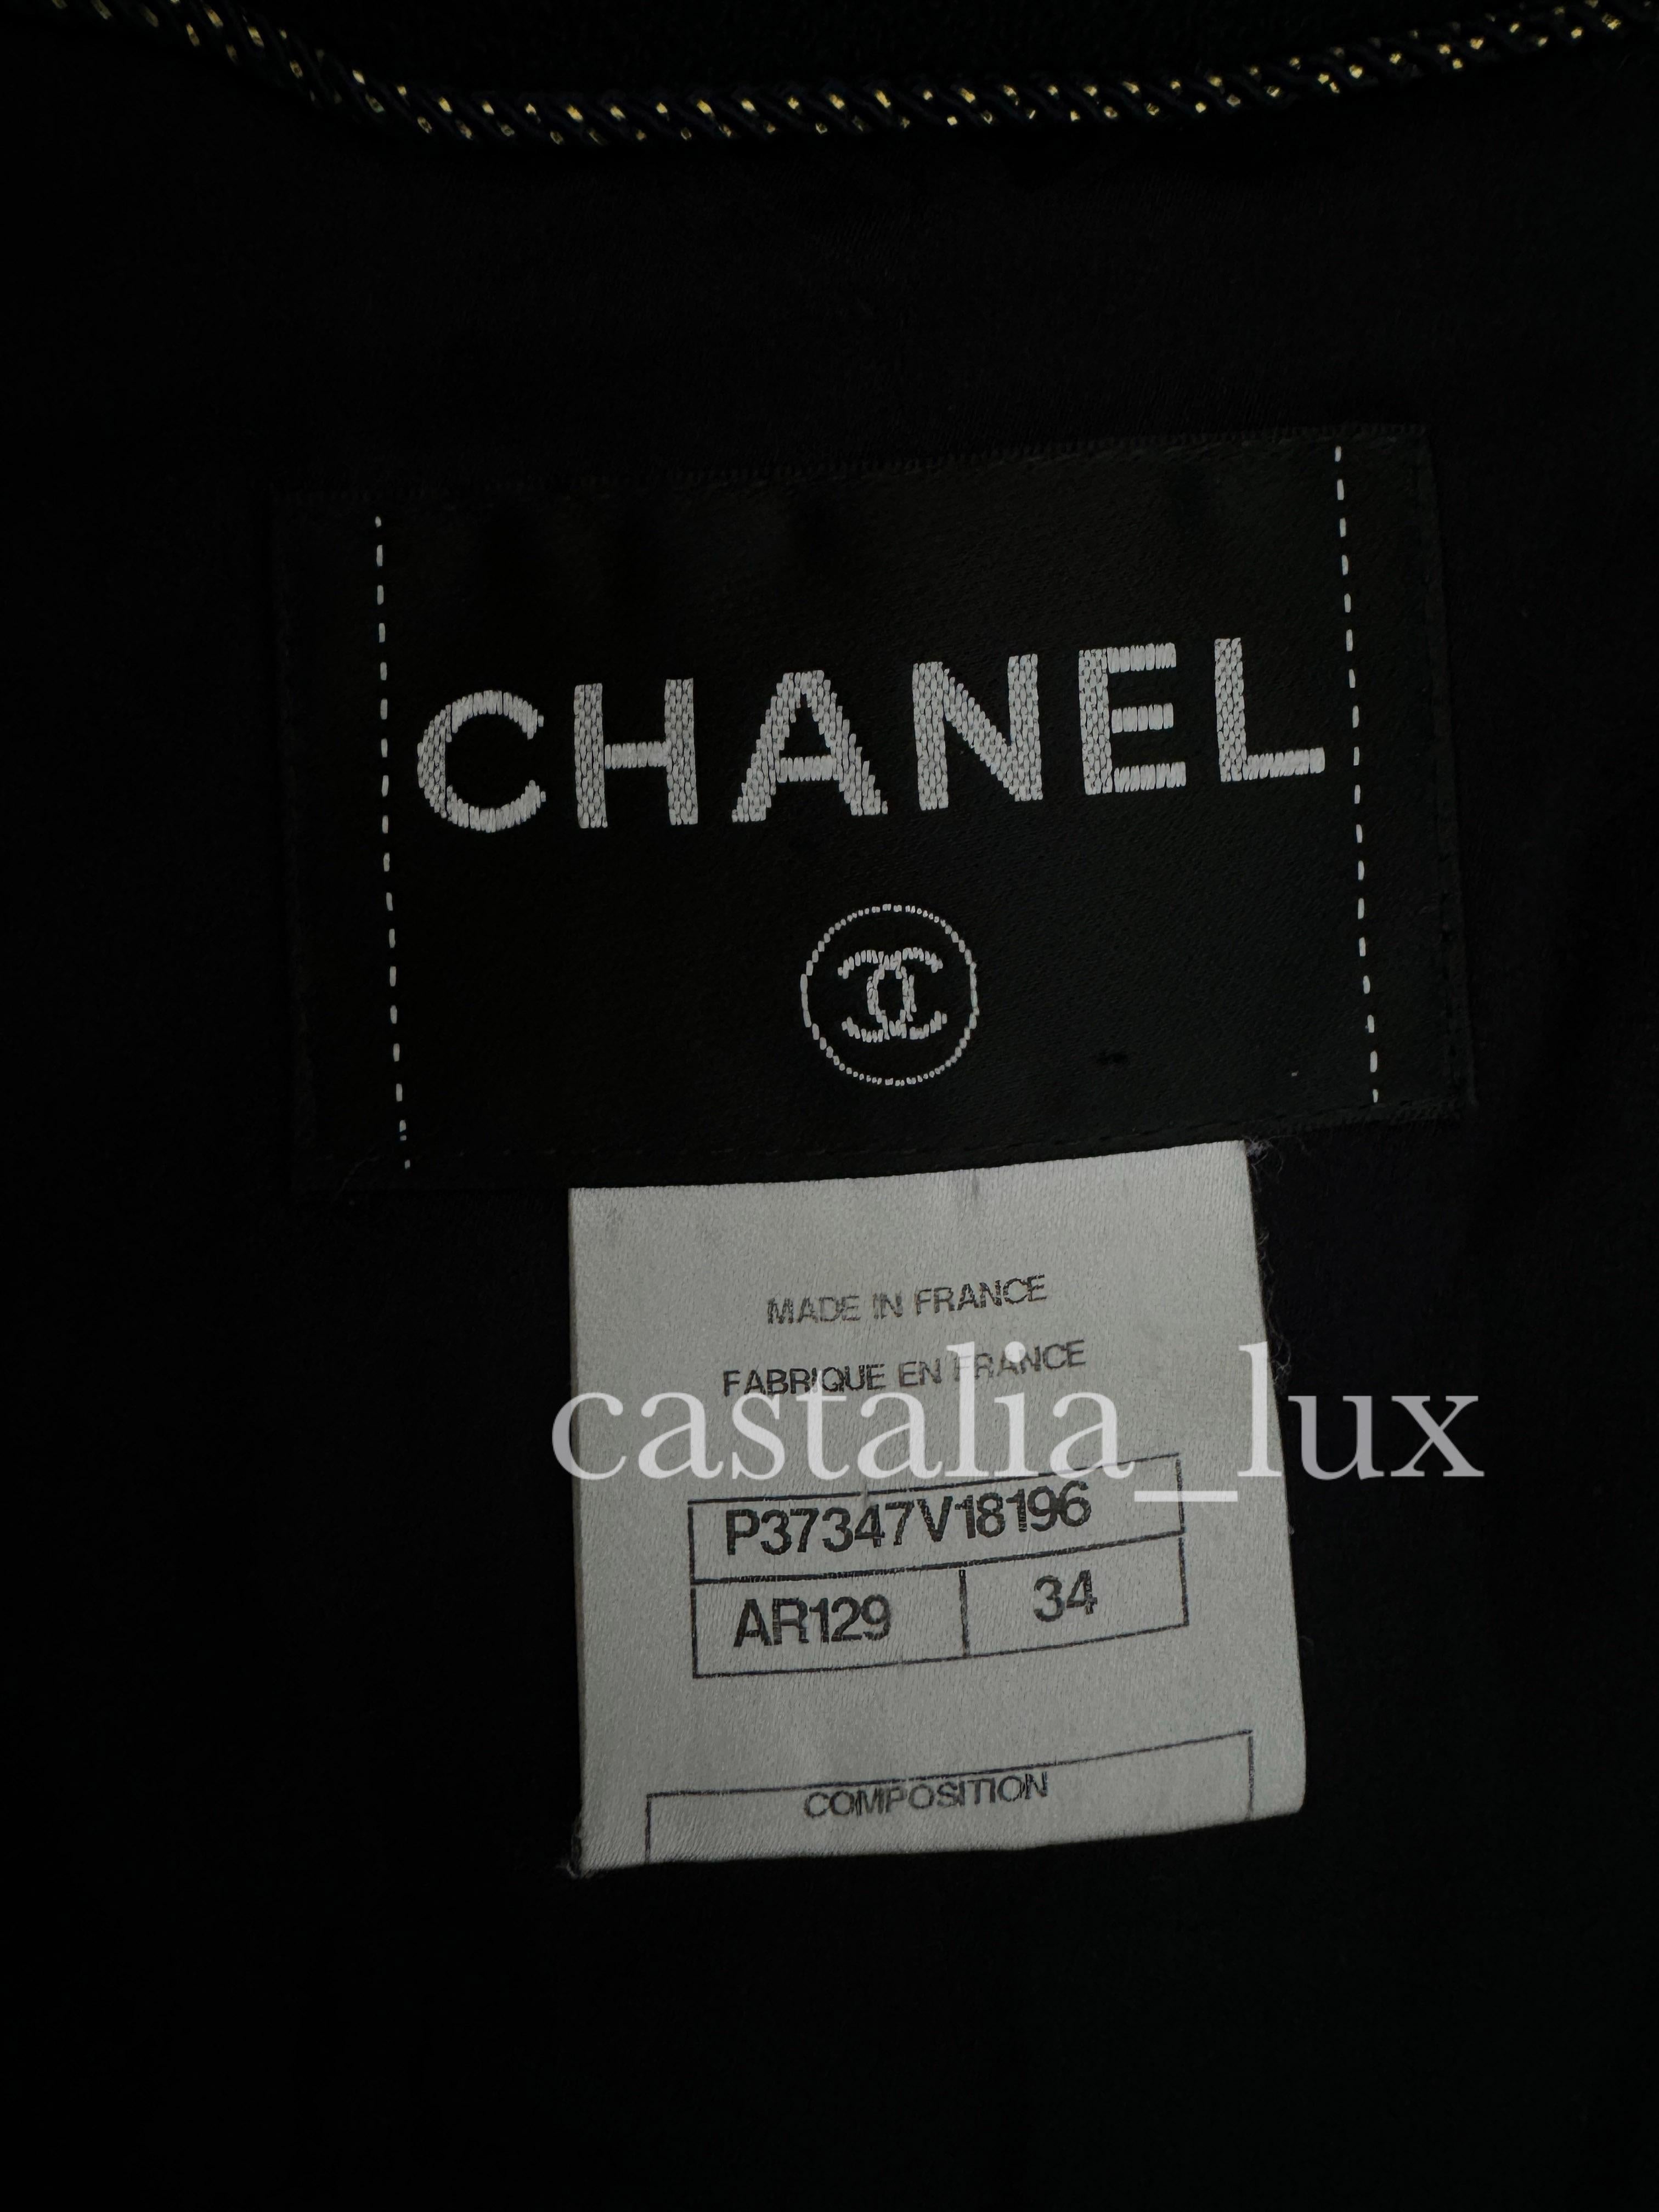 Chanel Iconic Paris / Venice Little Tweed Jacket 8